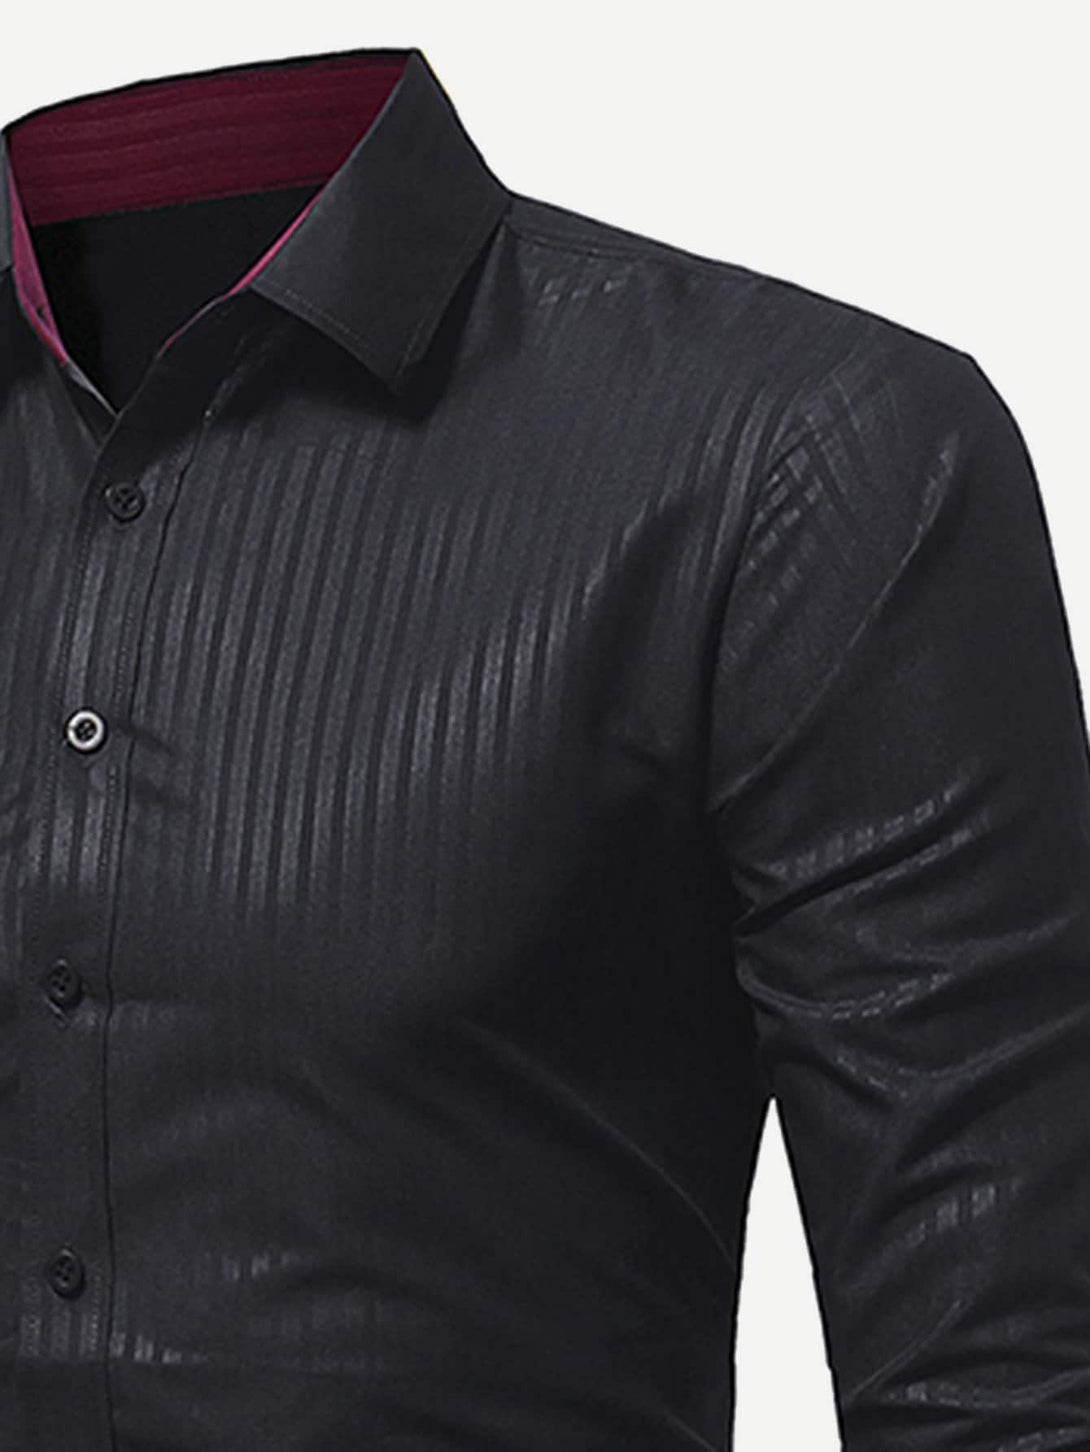 SHEIN Black Trim Striped High End Semi Formal Shirt - Negative Apparel